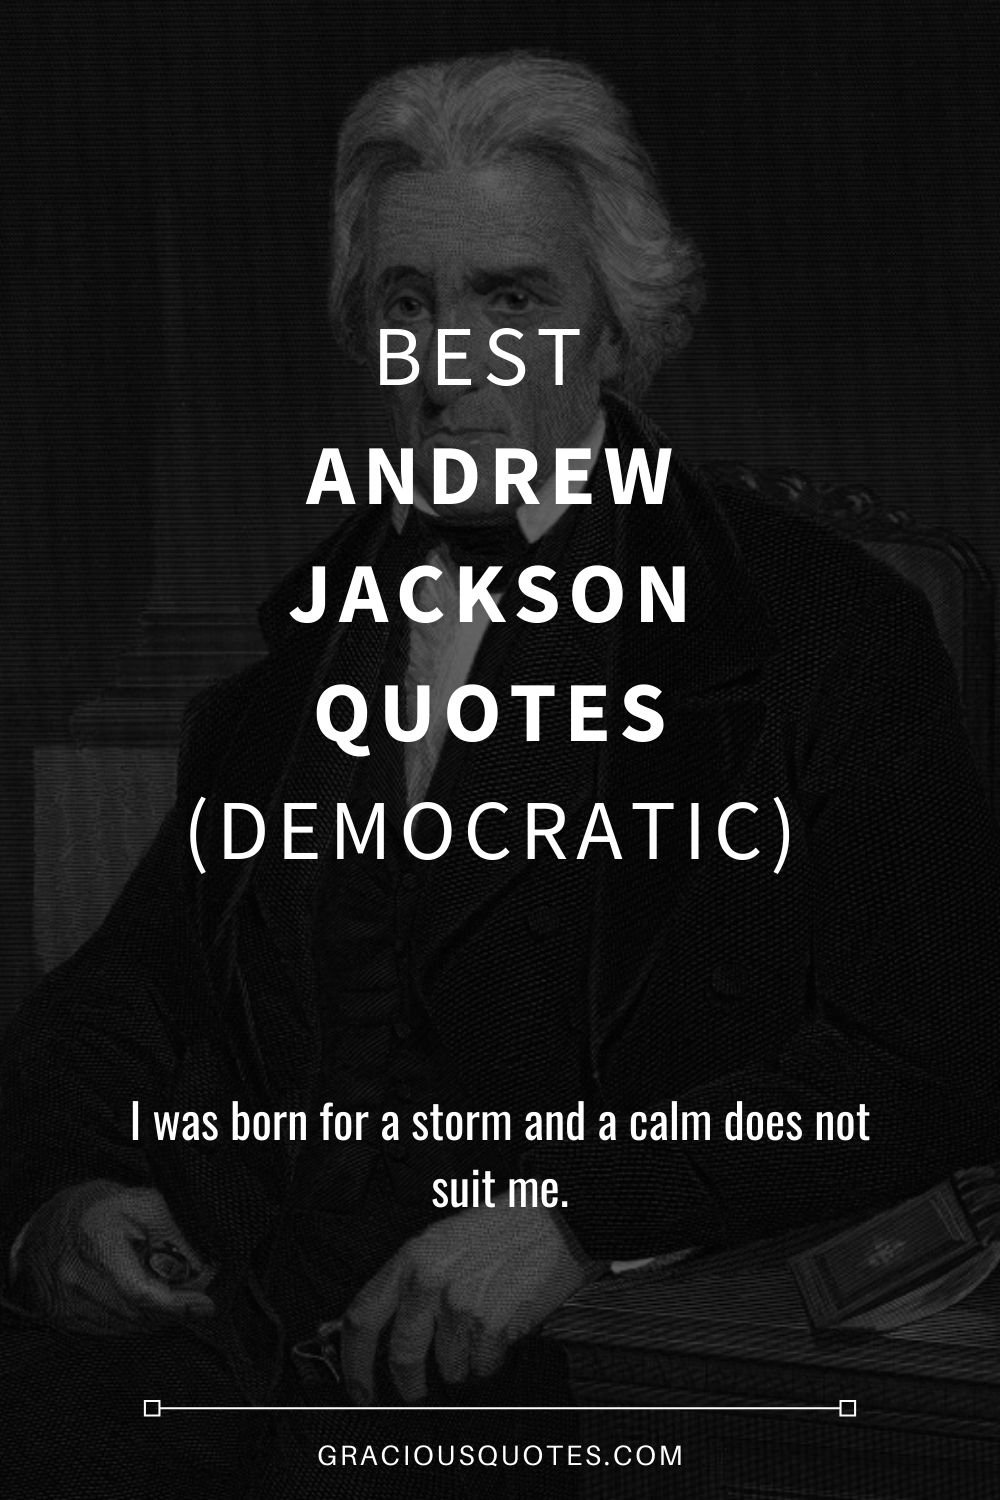 Best Andrew Jackson Quotes (DEMOCRATIC) - Gracious Quotes